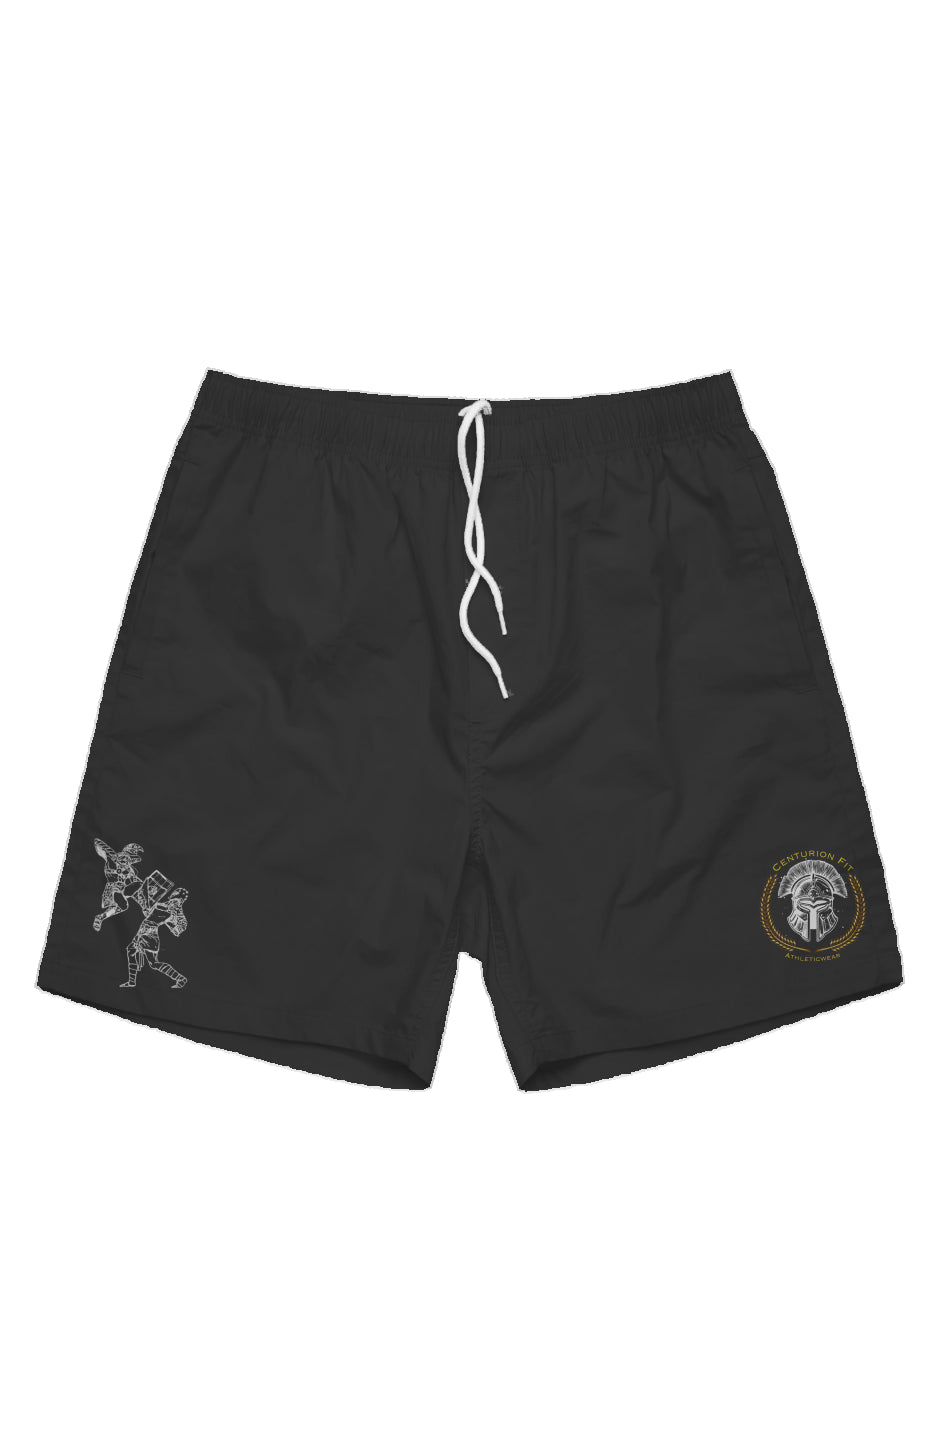 CenturionFit Gym Shorts: Gladiator Collection